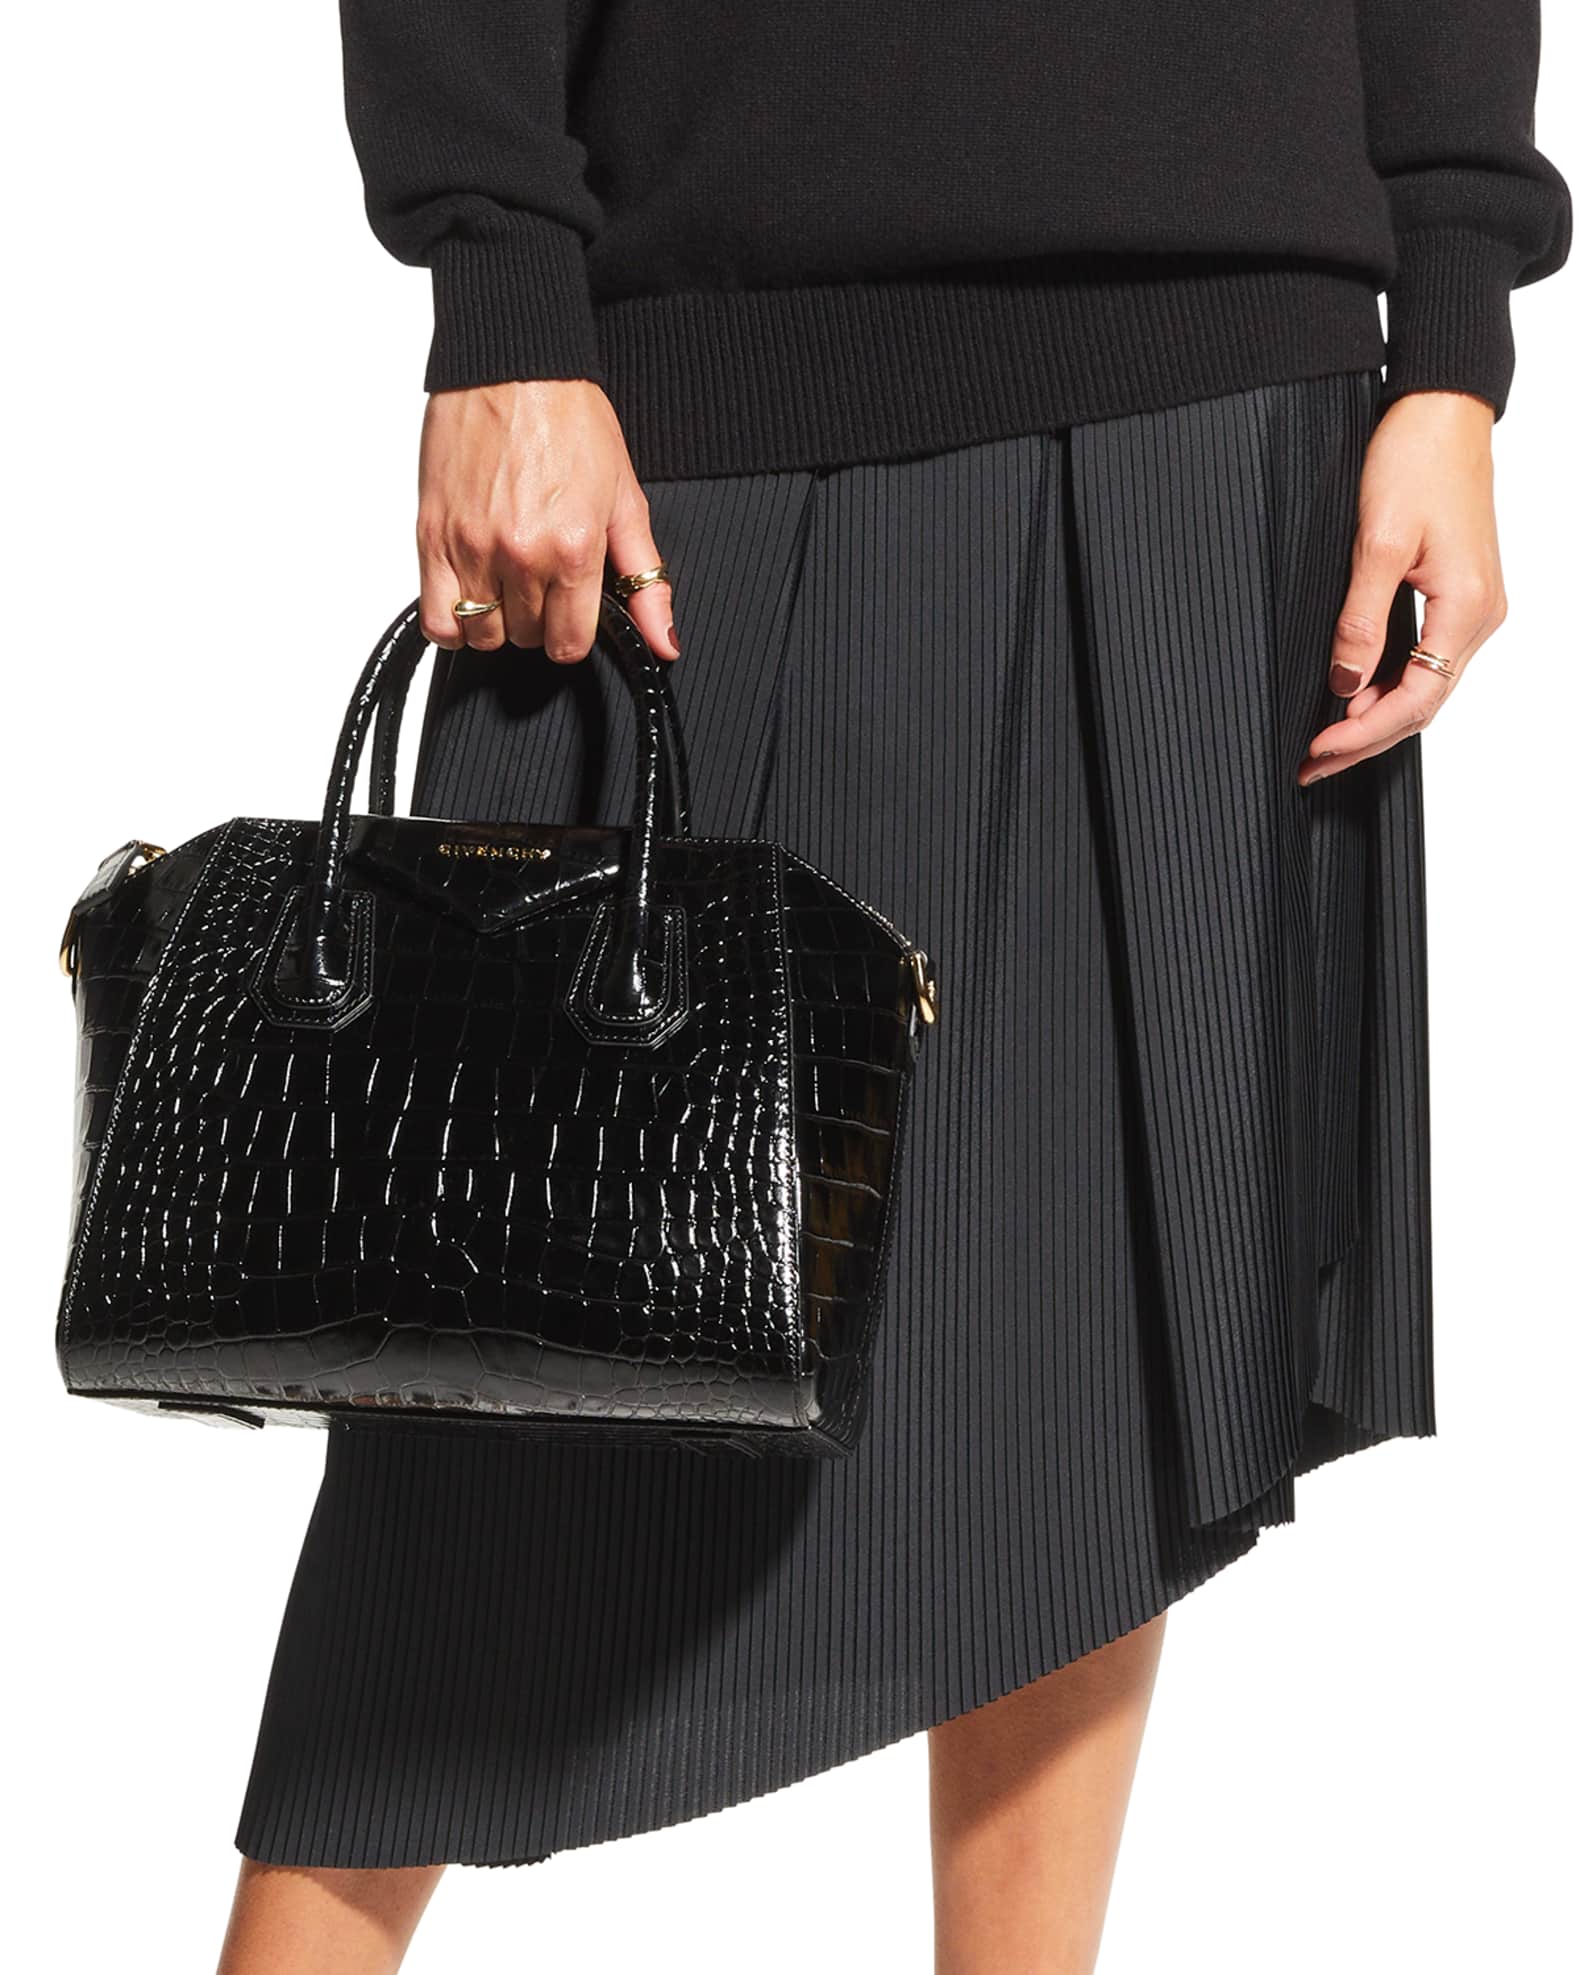 atomar bakke lige Givenchy Antigona Small Croc-Embossed Leather Satchel Bag | Neiman Marcus